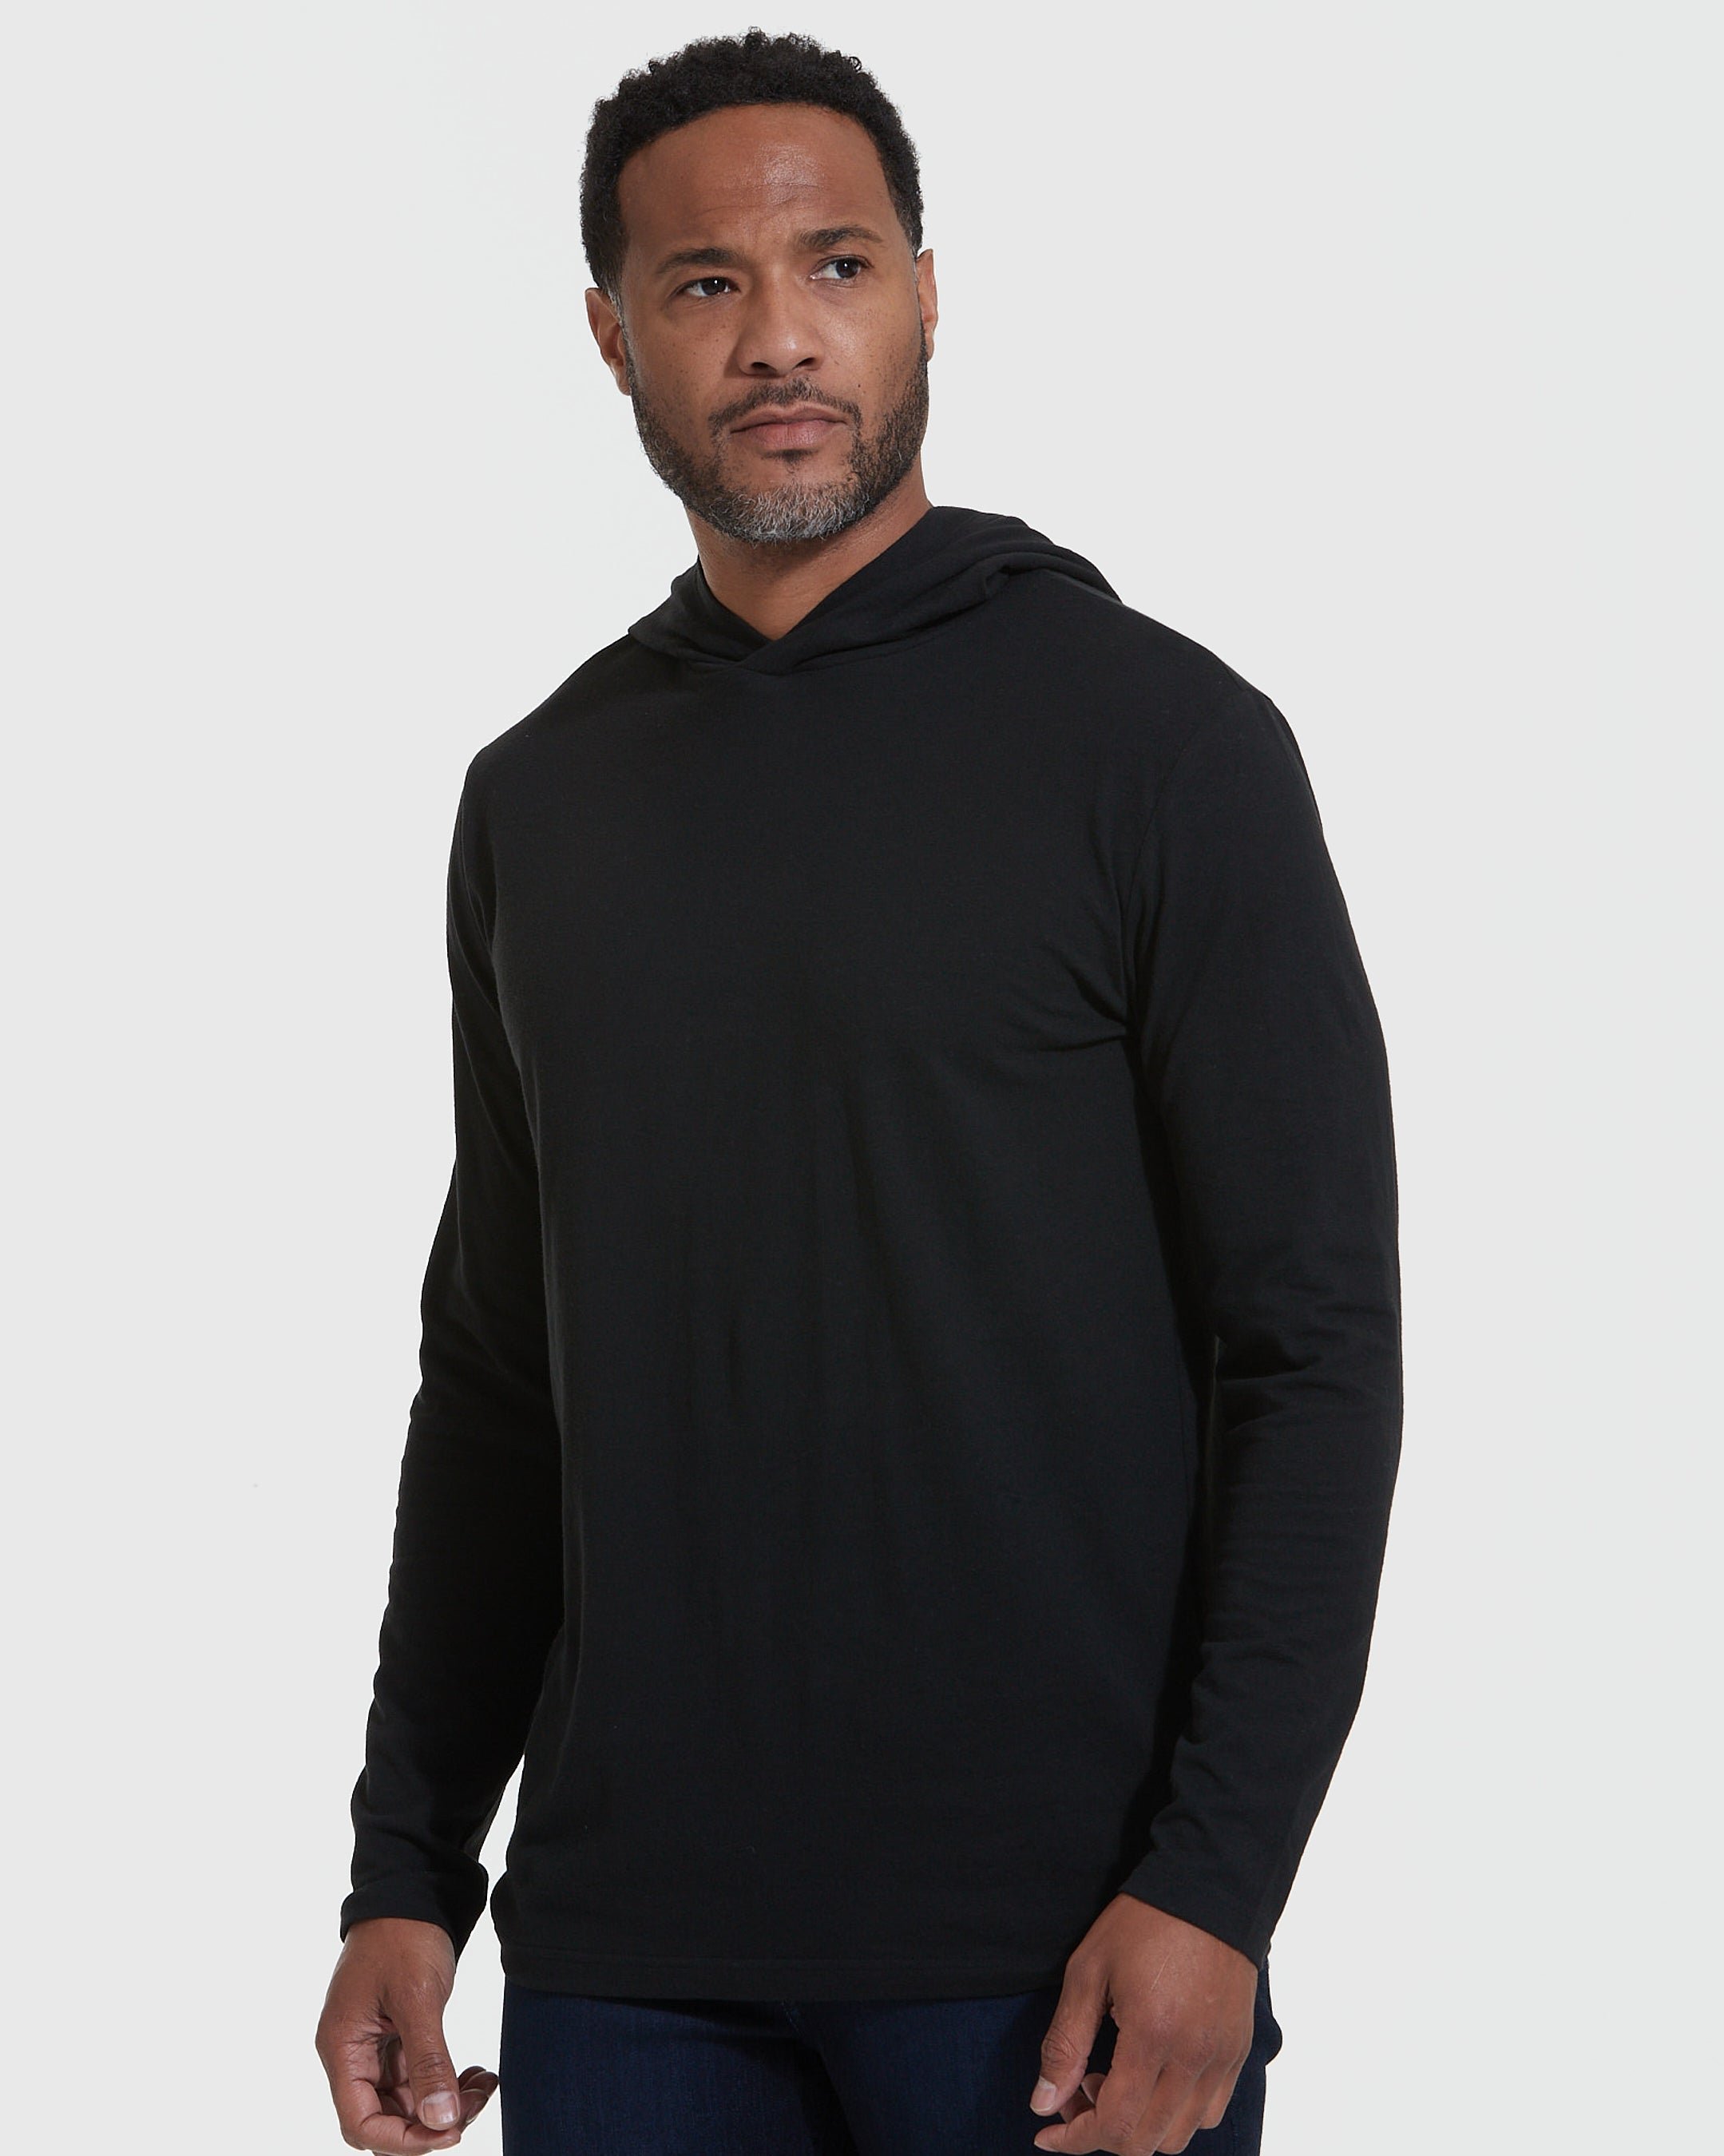 Black Hooded Long Sleeve T-Shirt